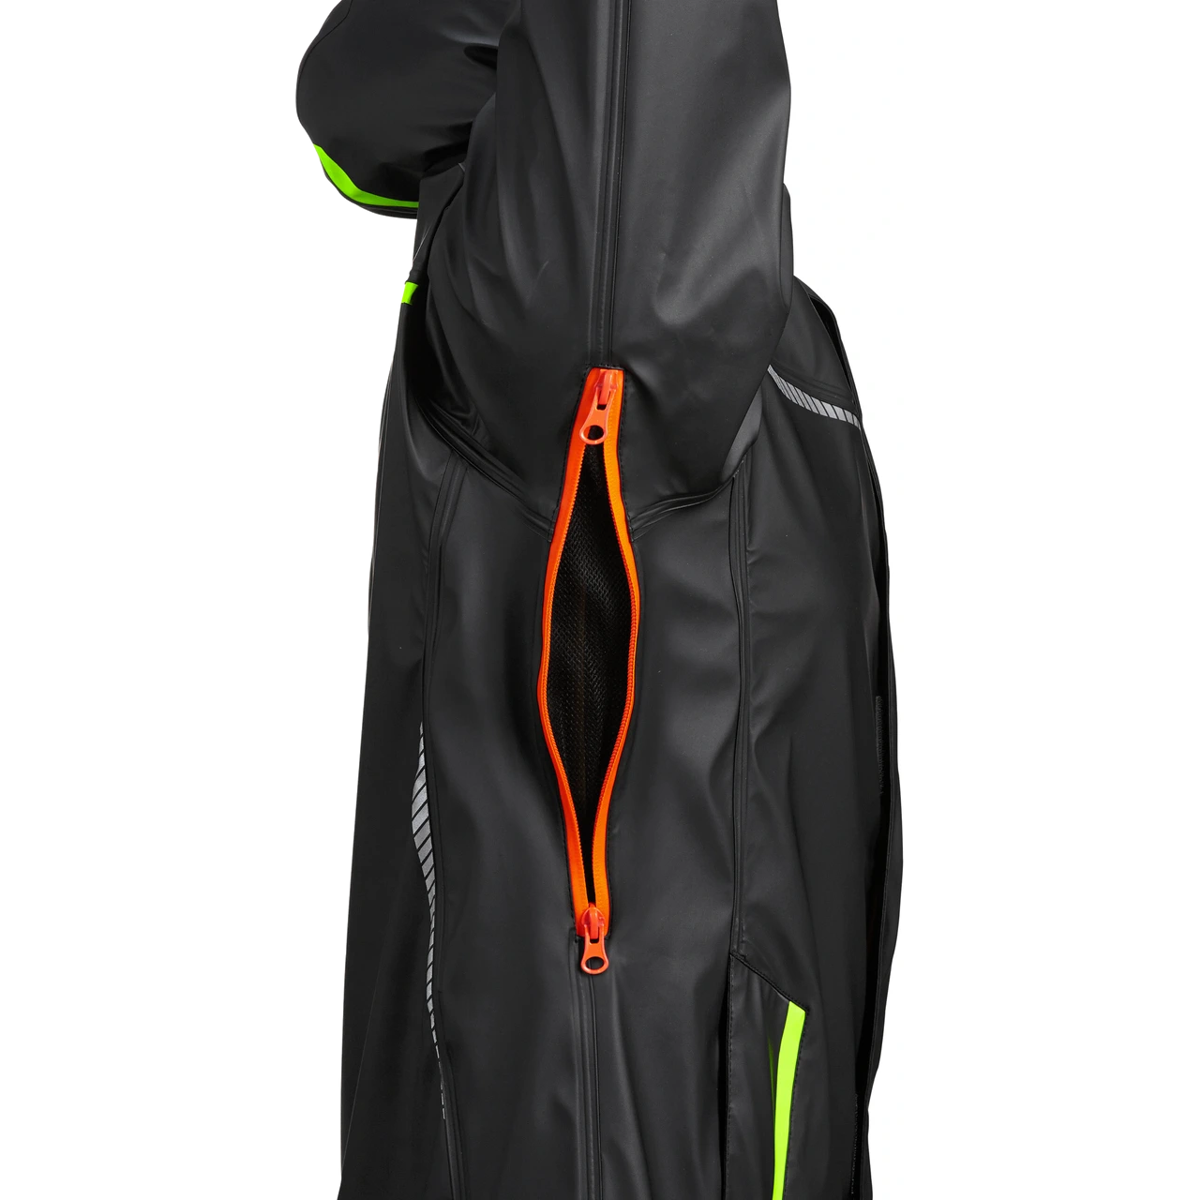 engelbert strauss Rain jacket e.s.motion 2020 superflex German Workwear